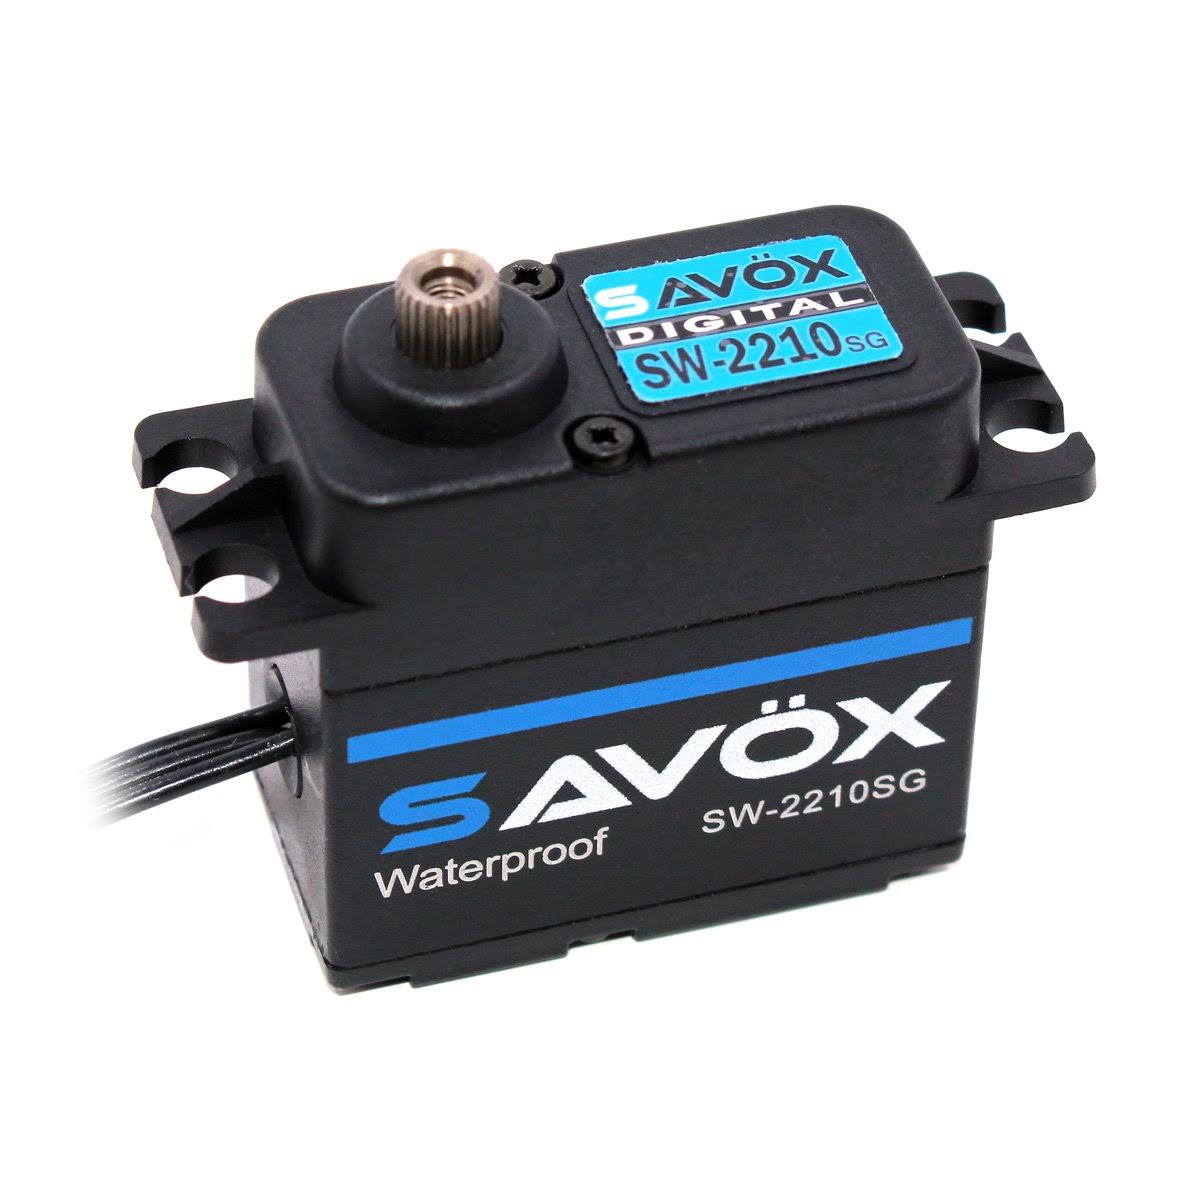 Savox Waterproof Premium, High Voltage, Brushless, Digital Servo